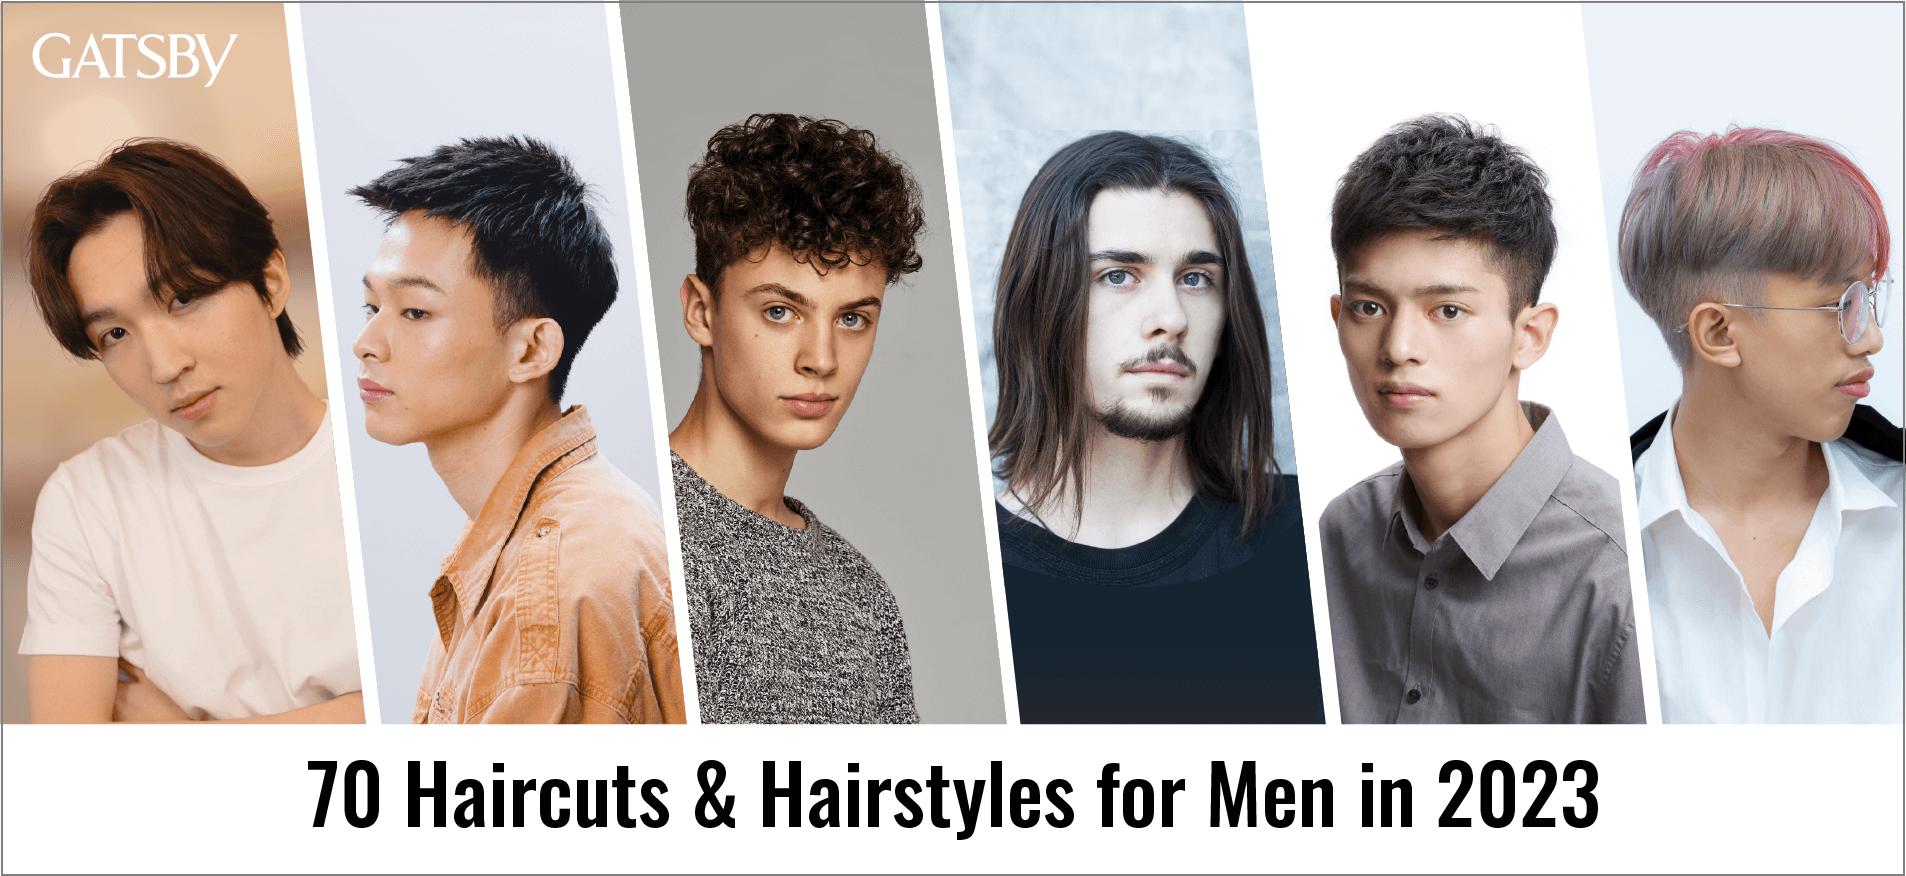 40+ Best Crop Top Fade Haircuts for Men in 2023 - Men's Hairstyle Tips in  2023 | Mens haircuts fade, Haircuts for men, Hair styles